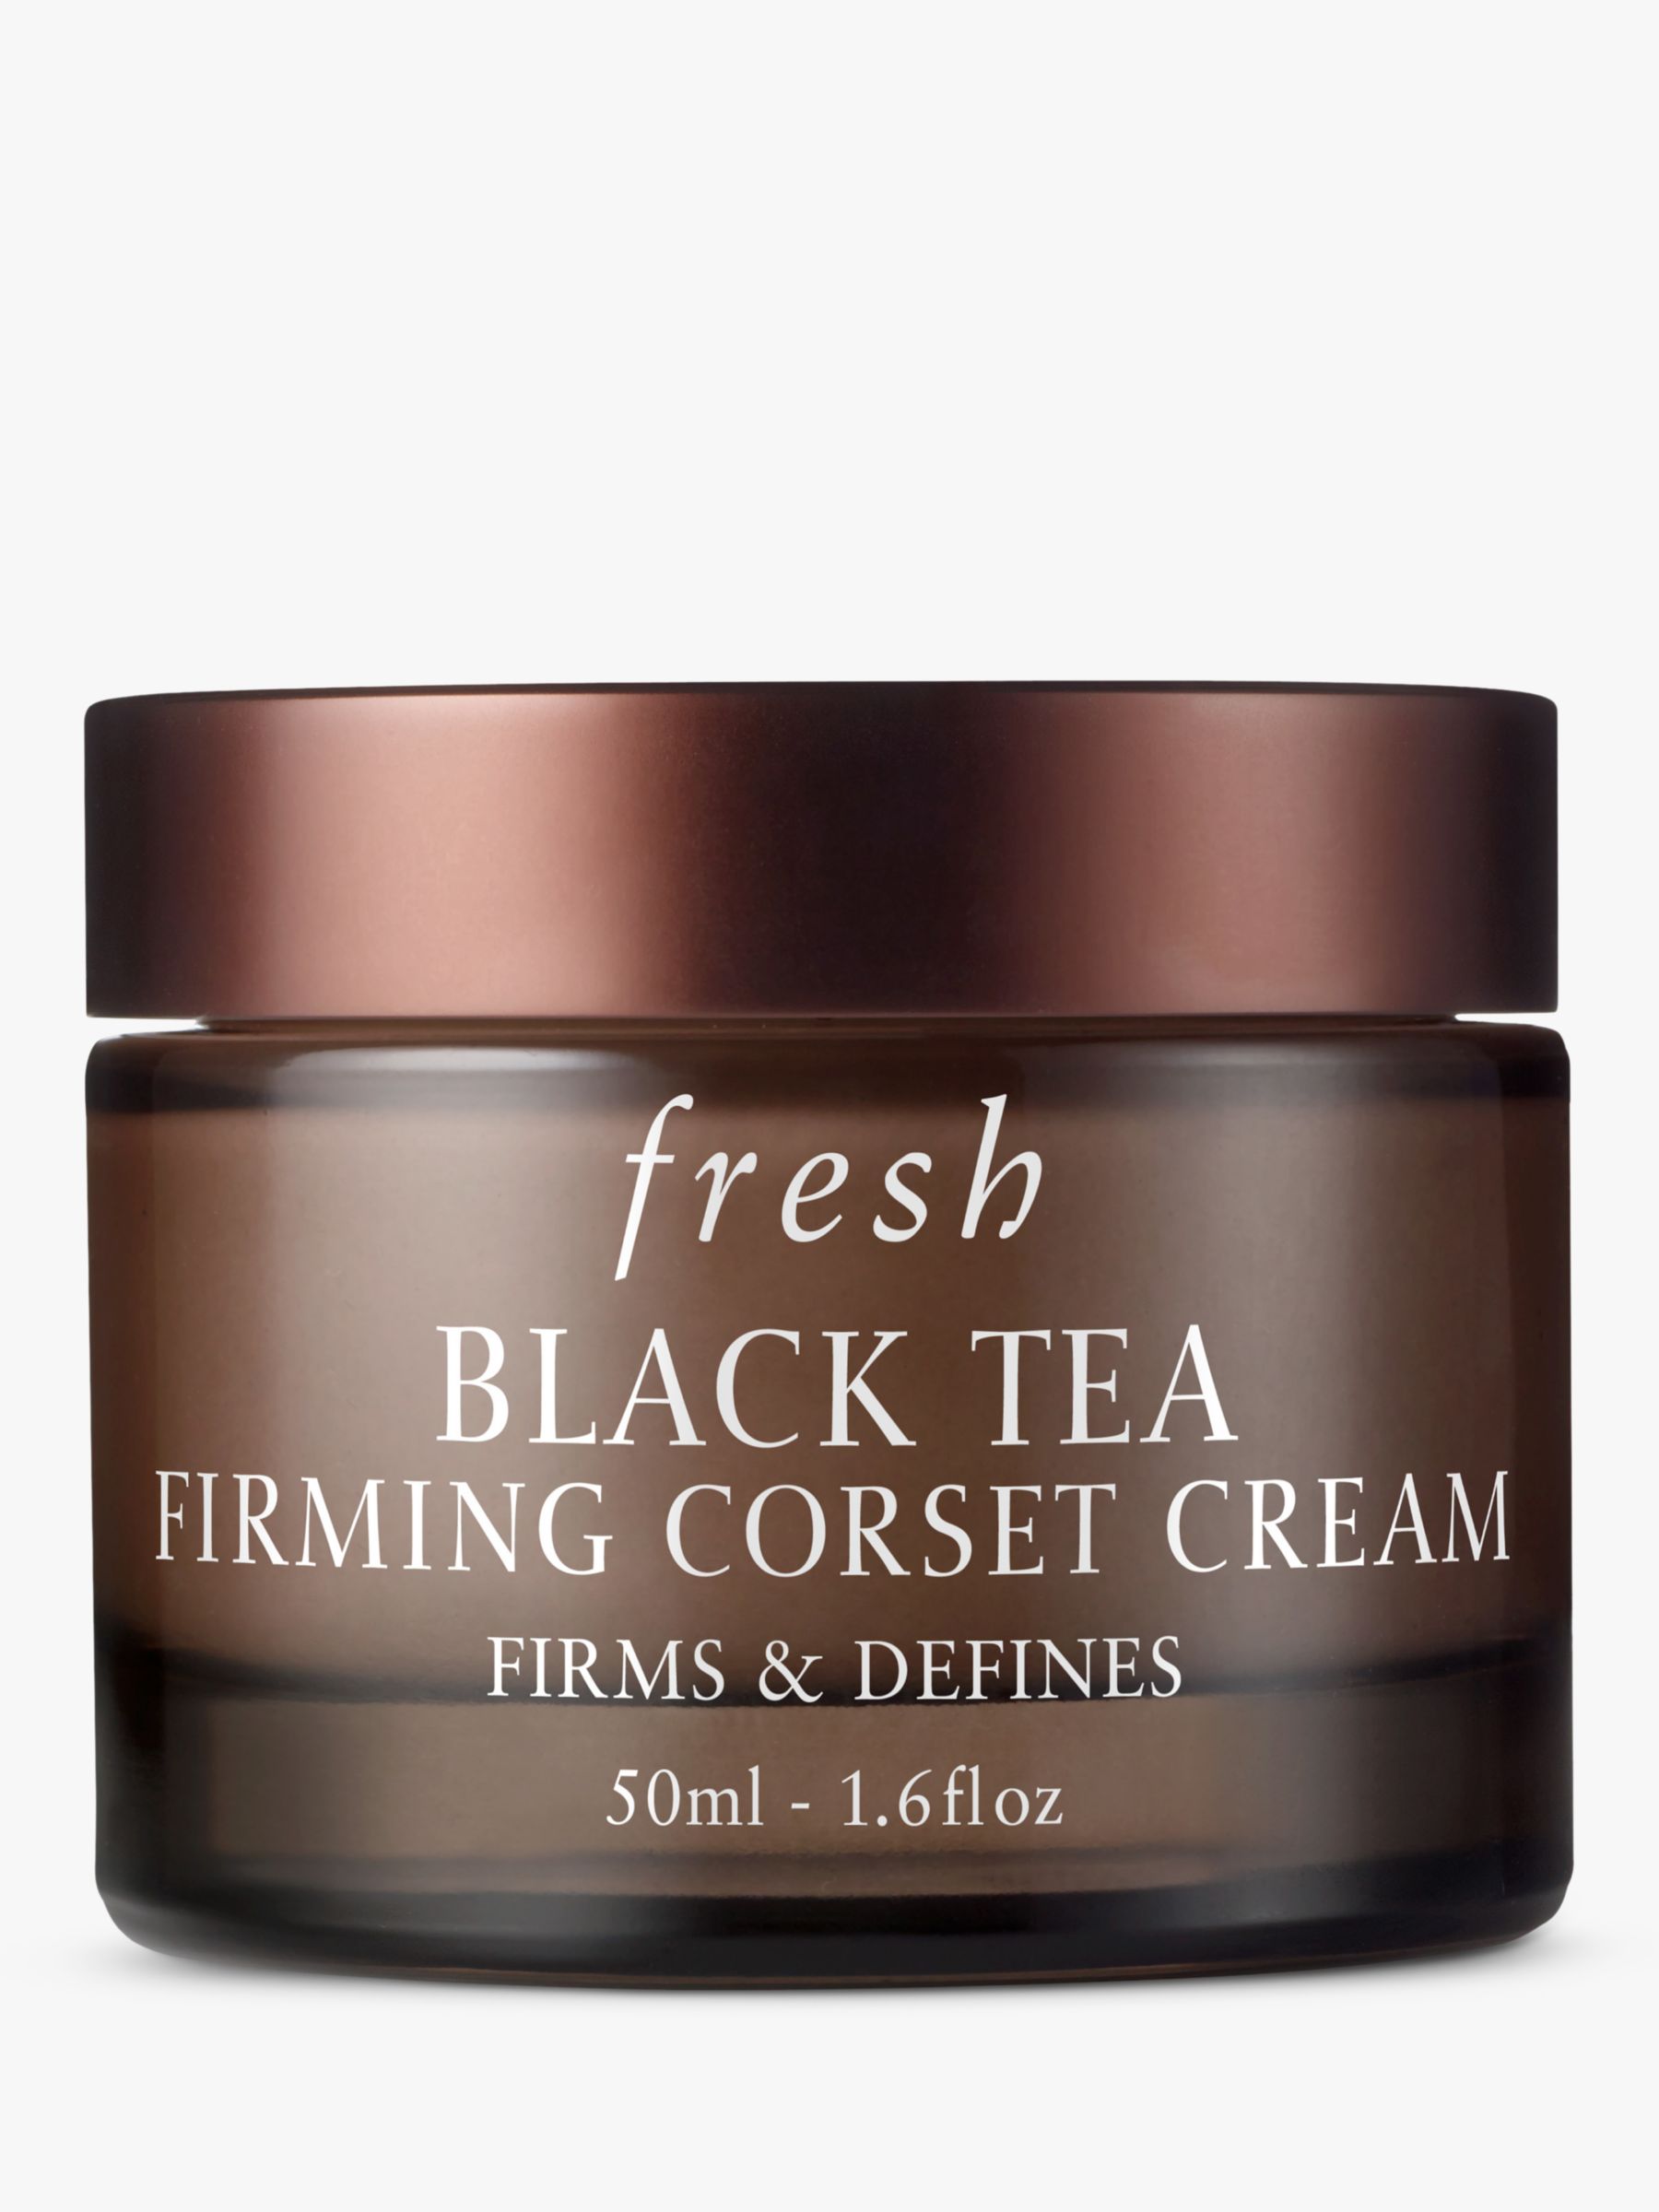 Fresh Black Tea Firming Corset Cream Moisturiser, 50ml 1